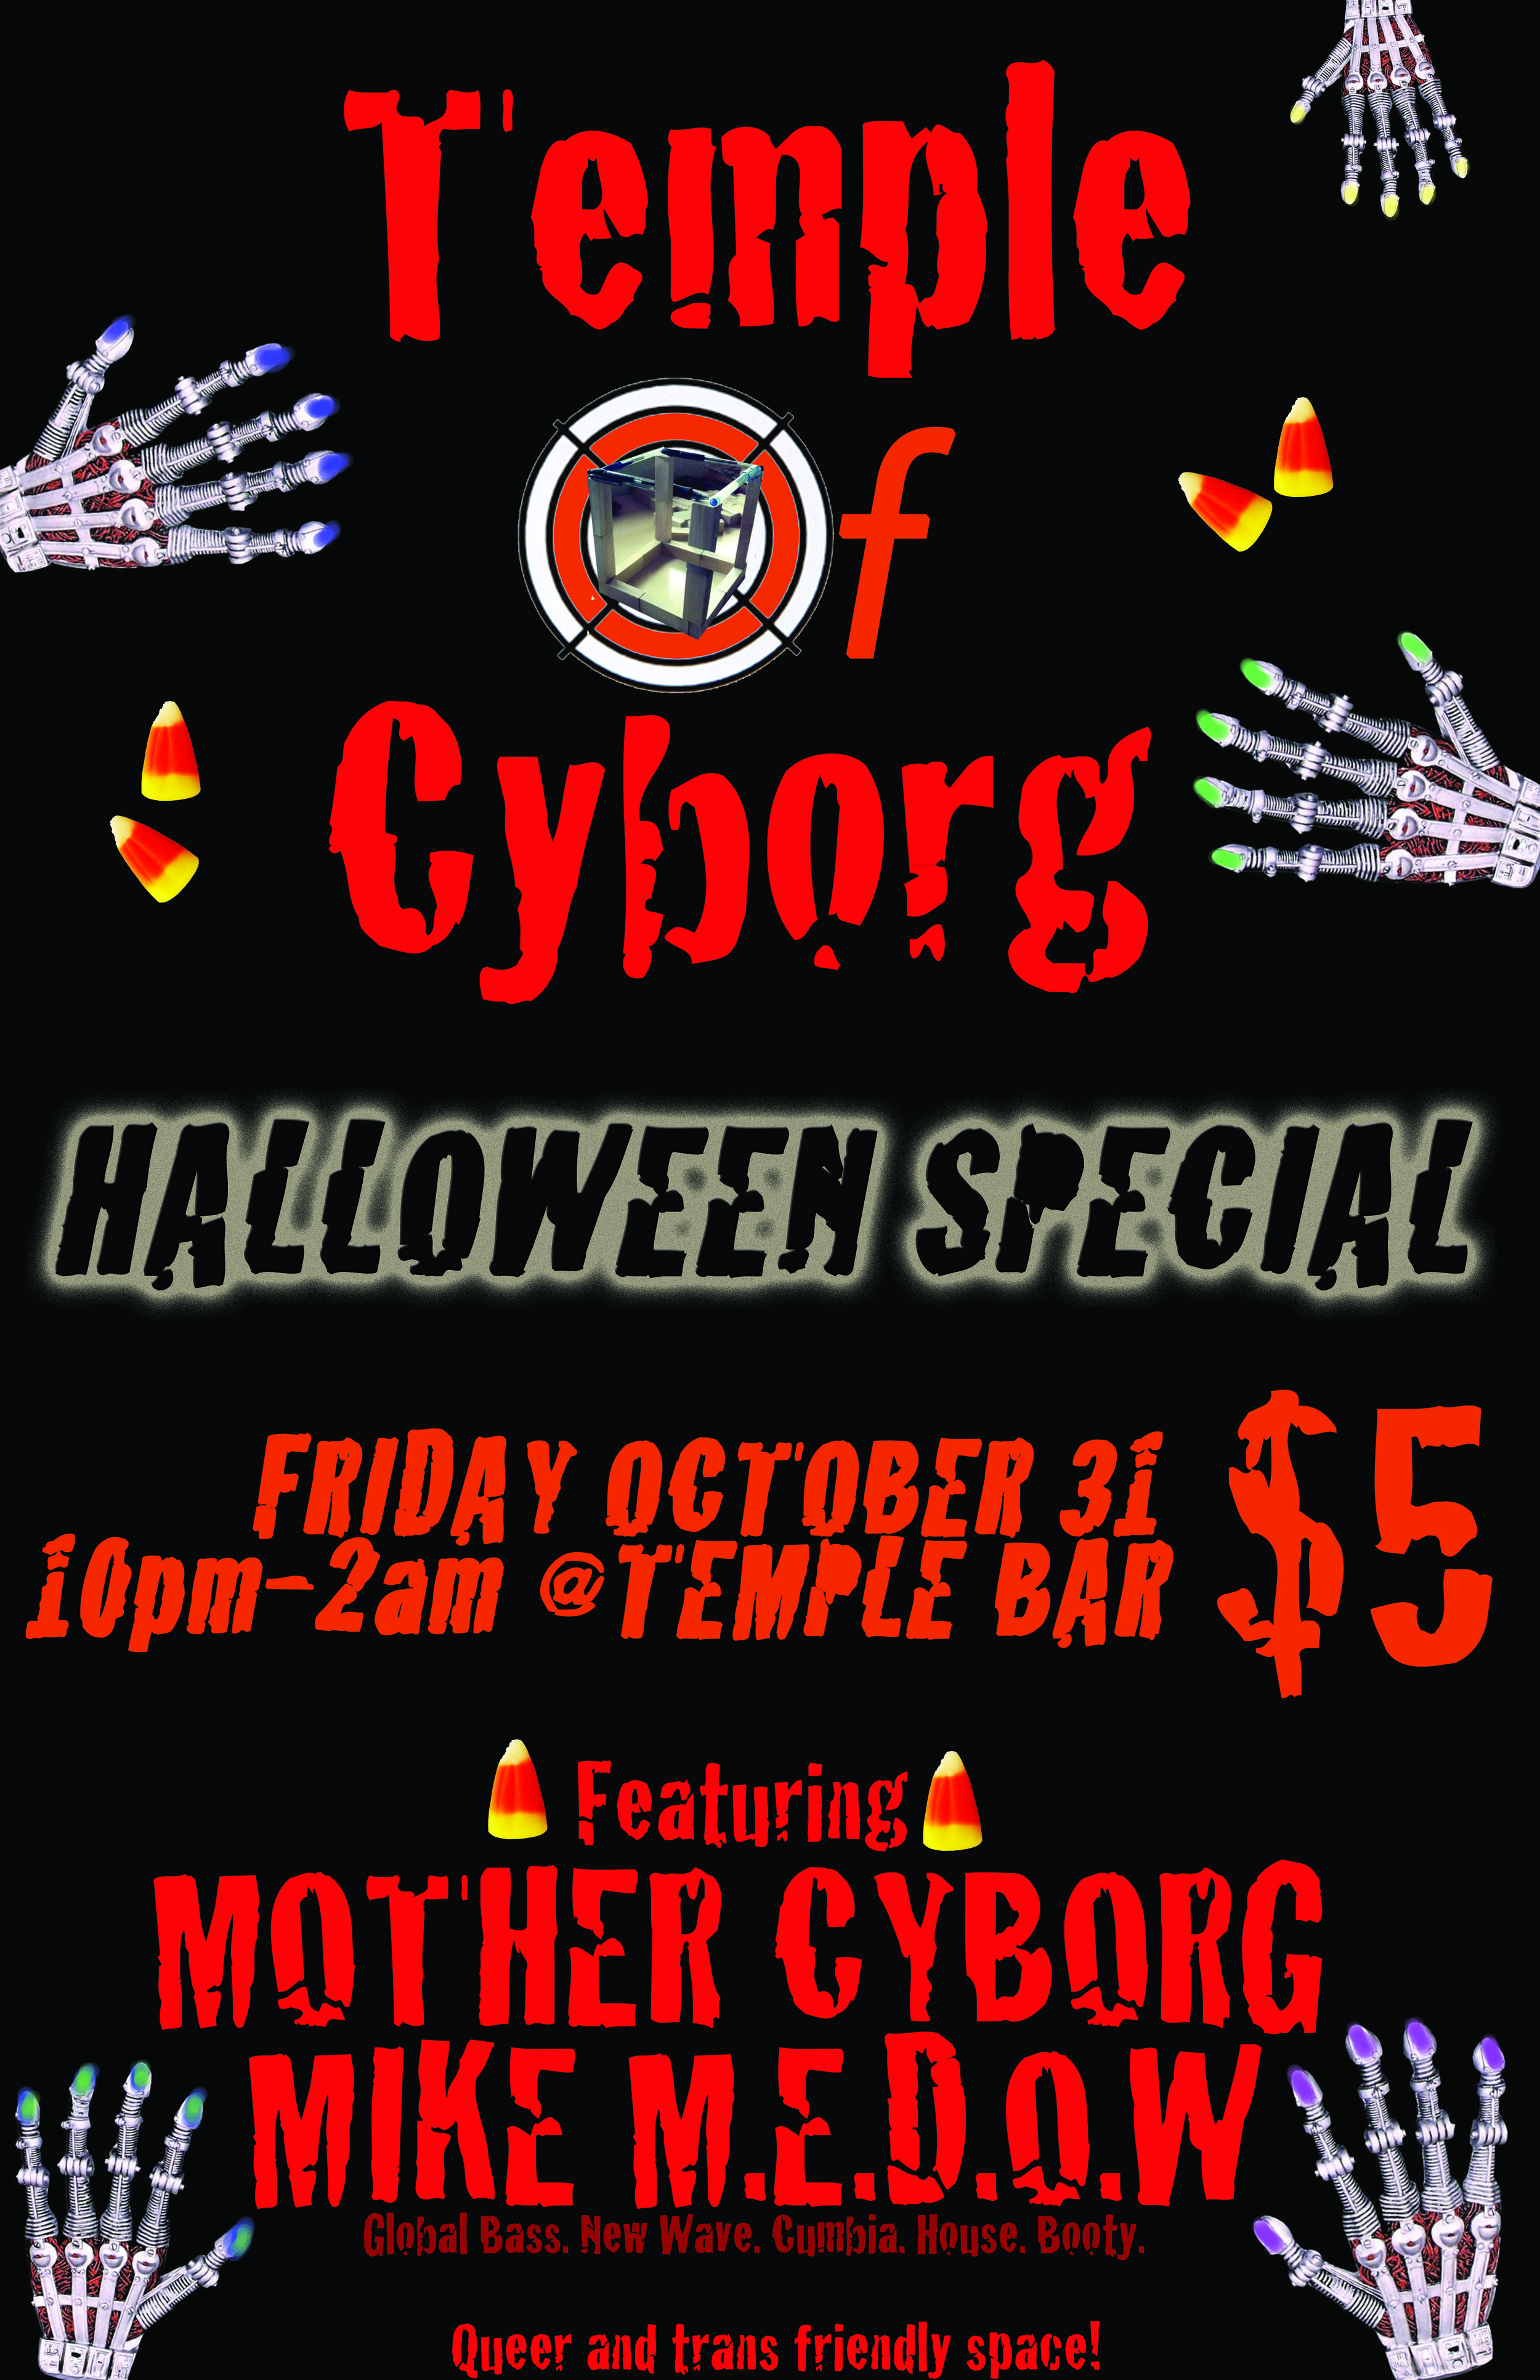 Temple of Cyborg Poster halloween.jpg